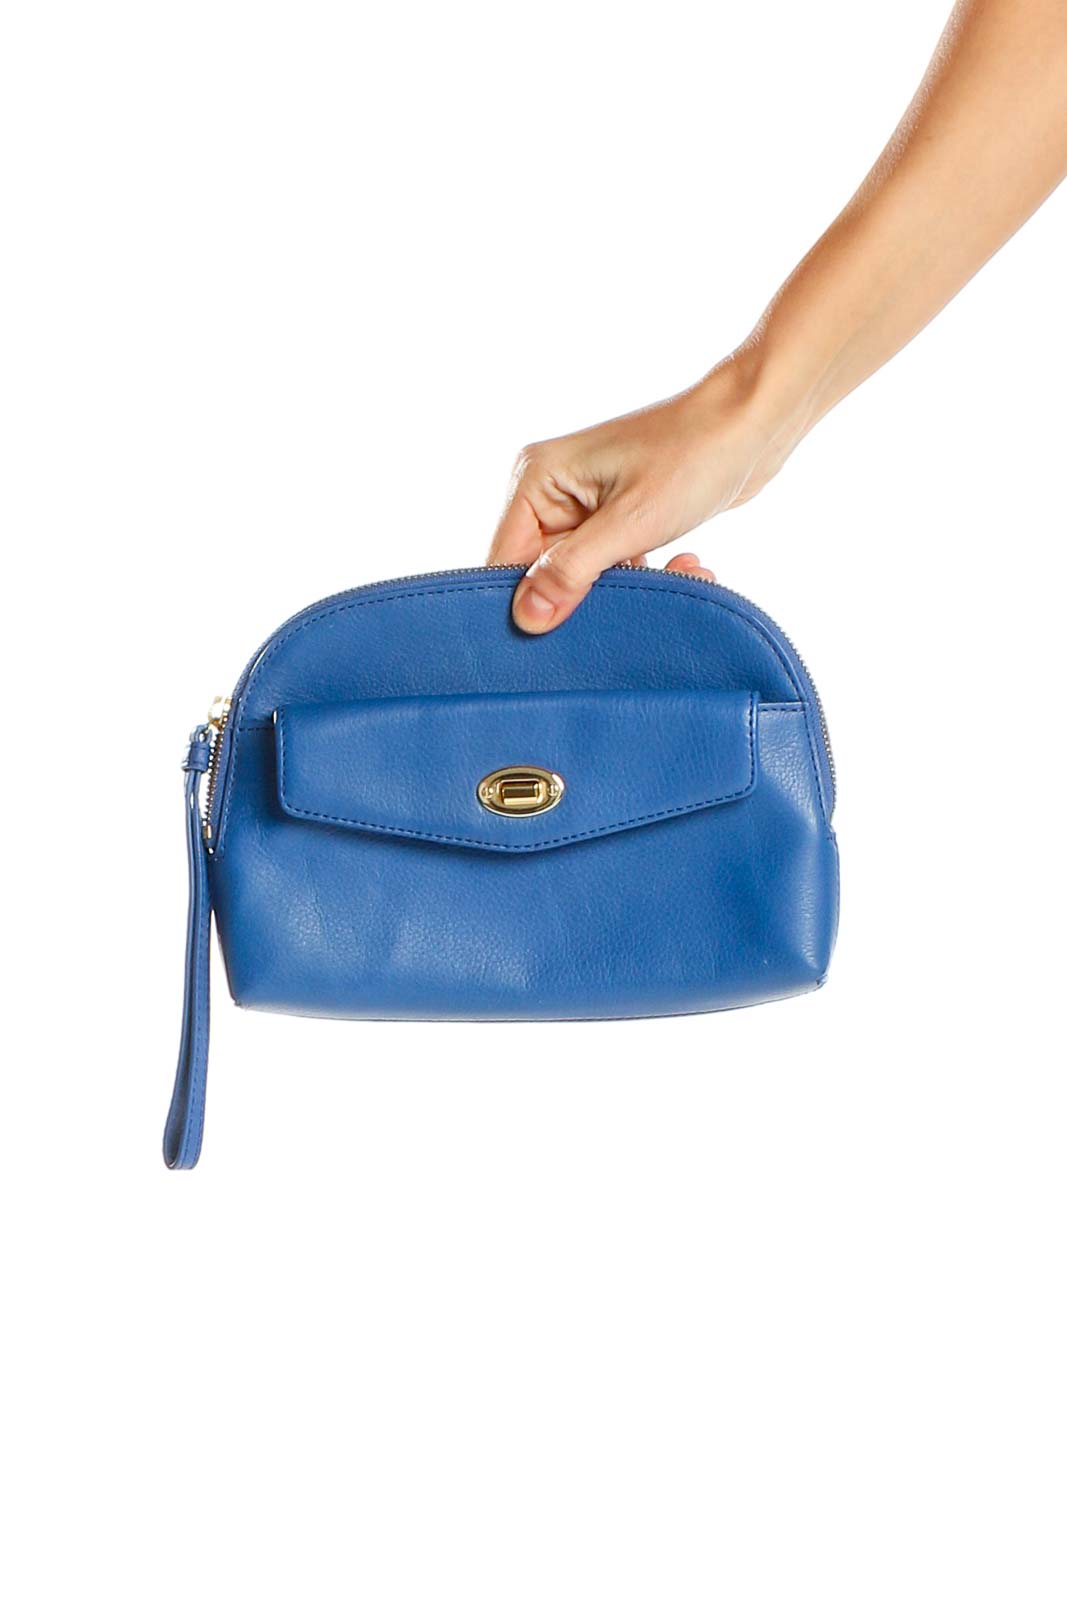 Blue Clutch Bag Front